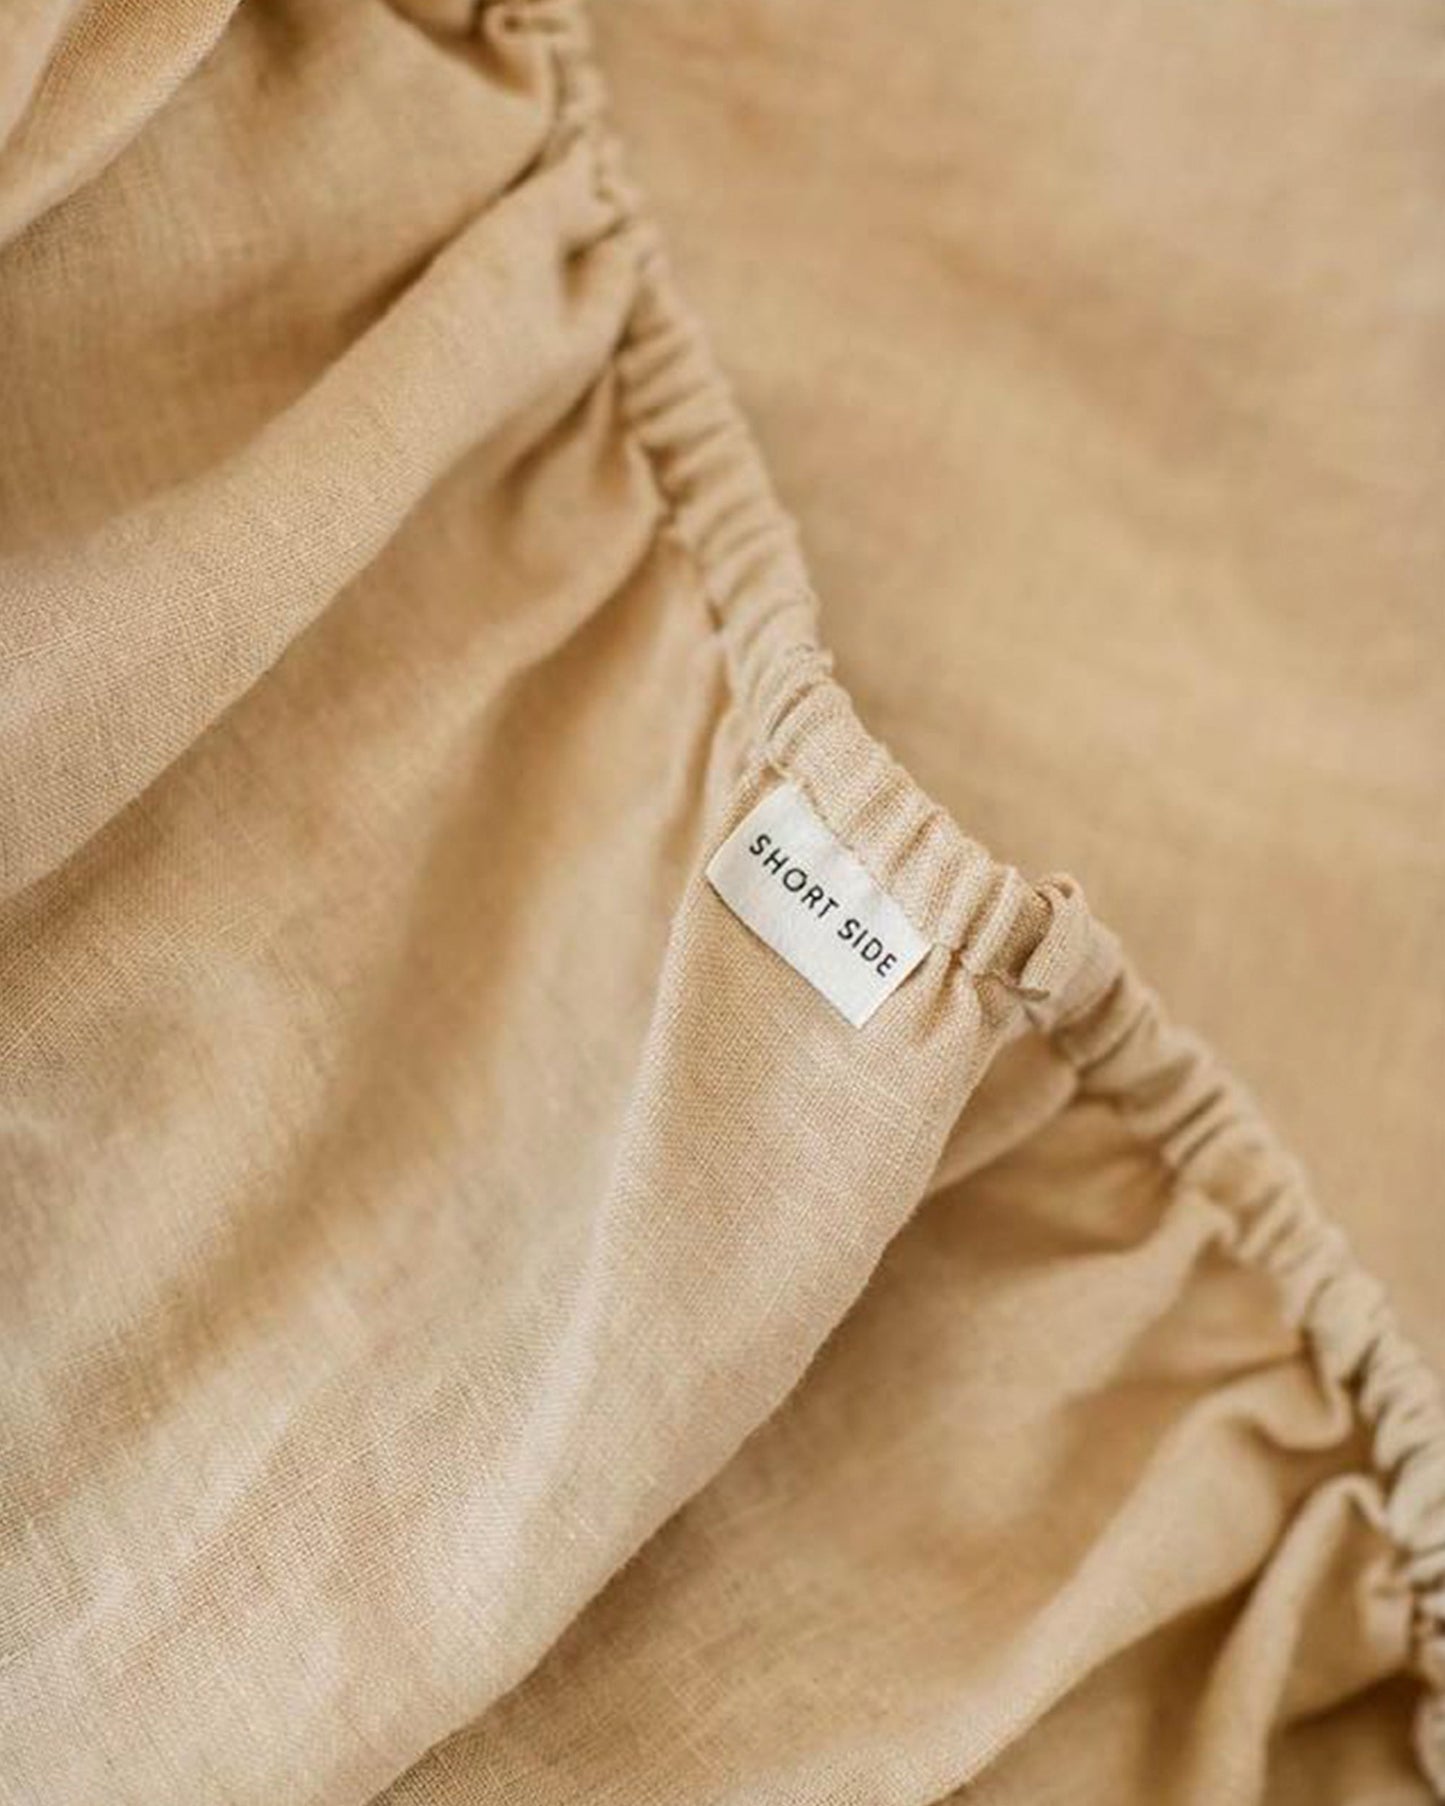 Custom size Sandy beige linen fitted sheet - MagicLinen